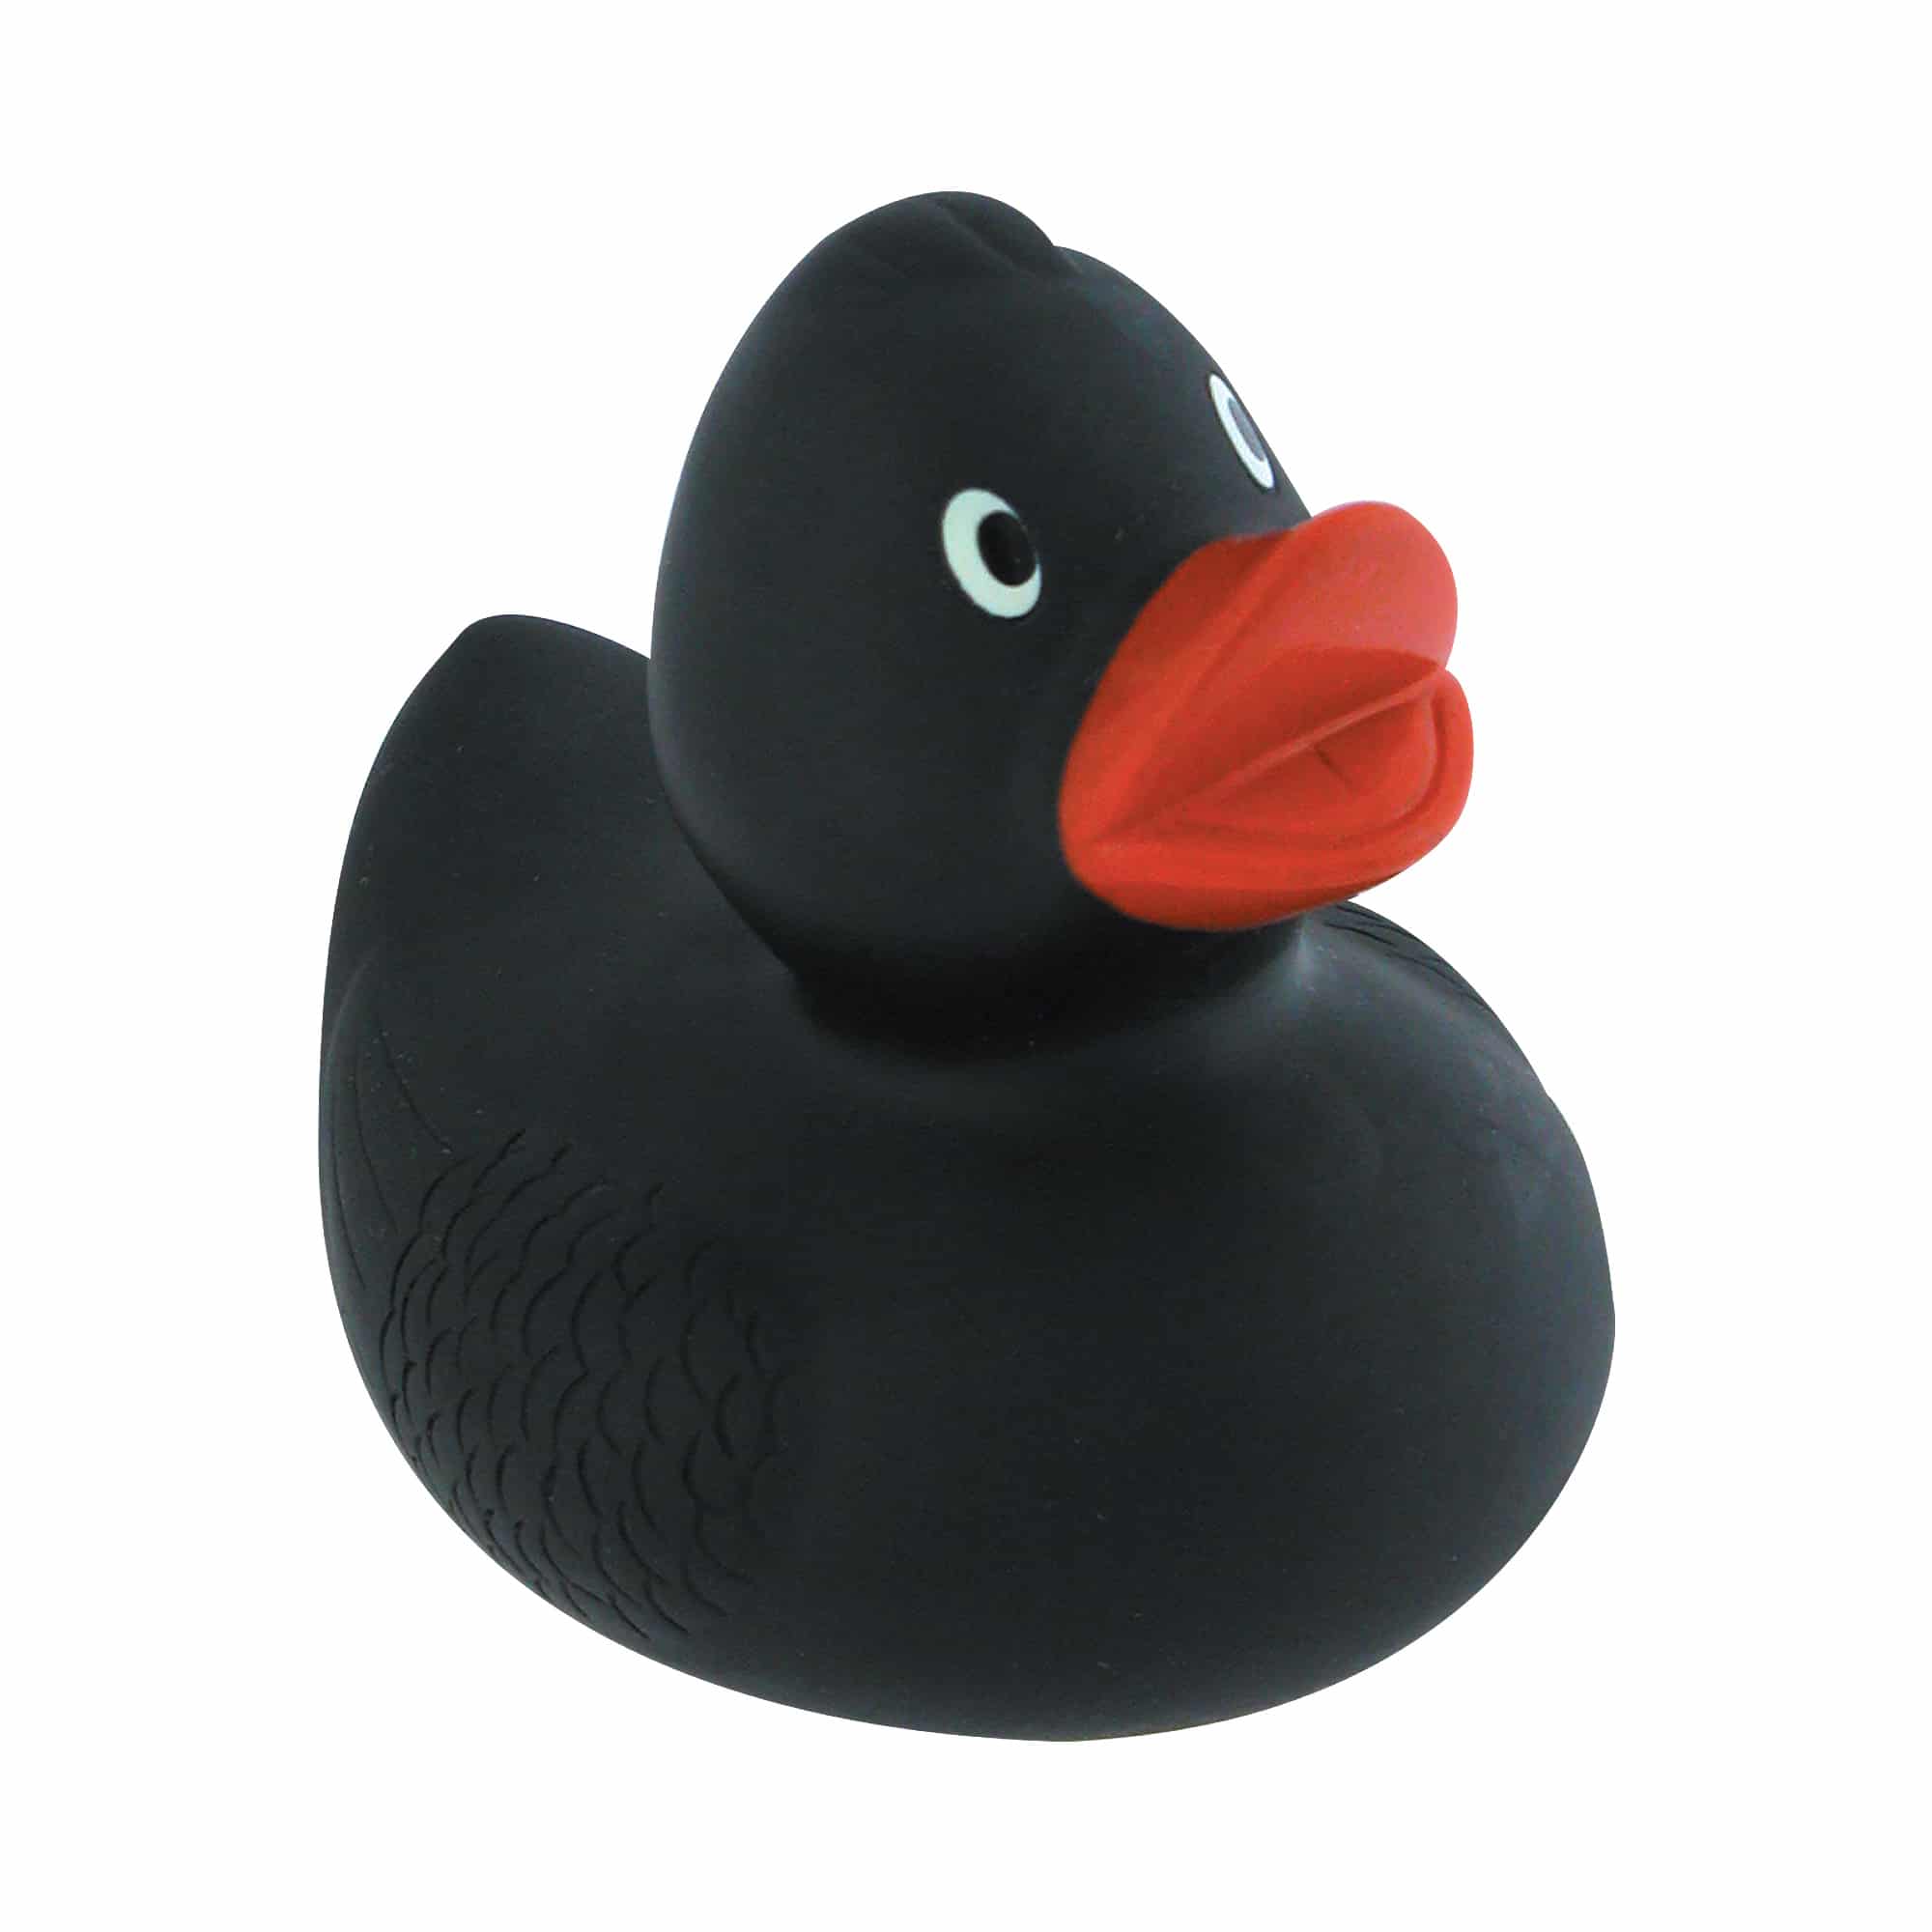 50 Pack Multicolor Mini Rubber Ducky Float Ducks Baby Bath Toy